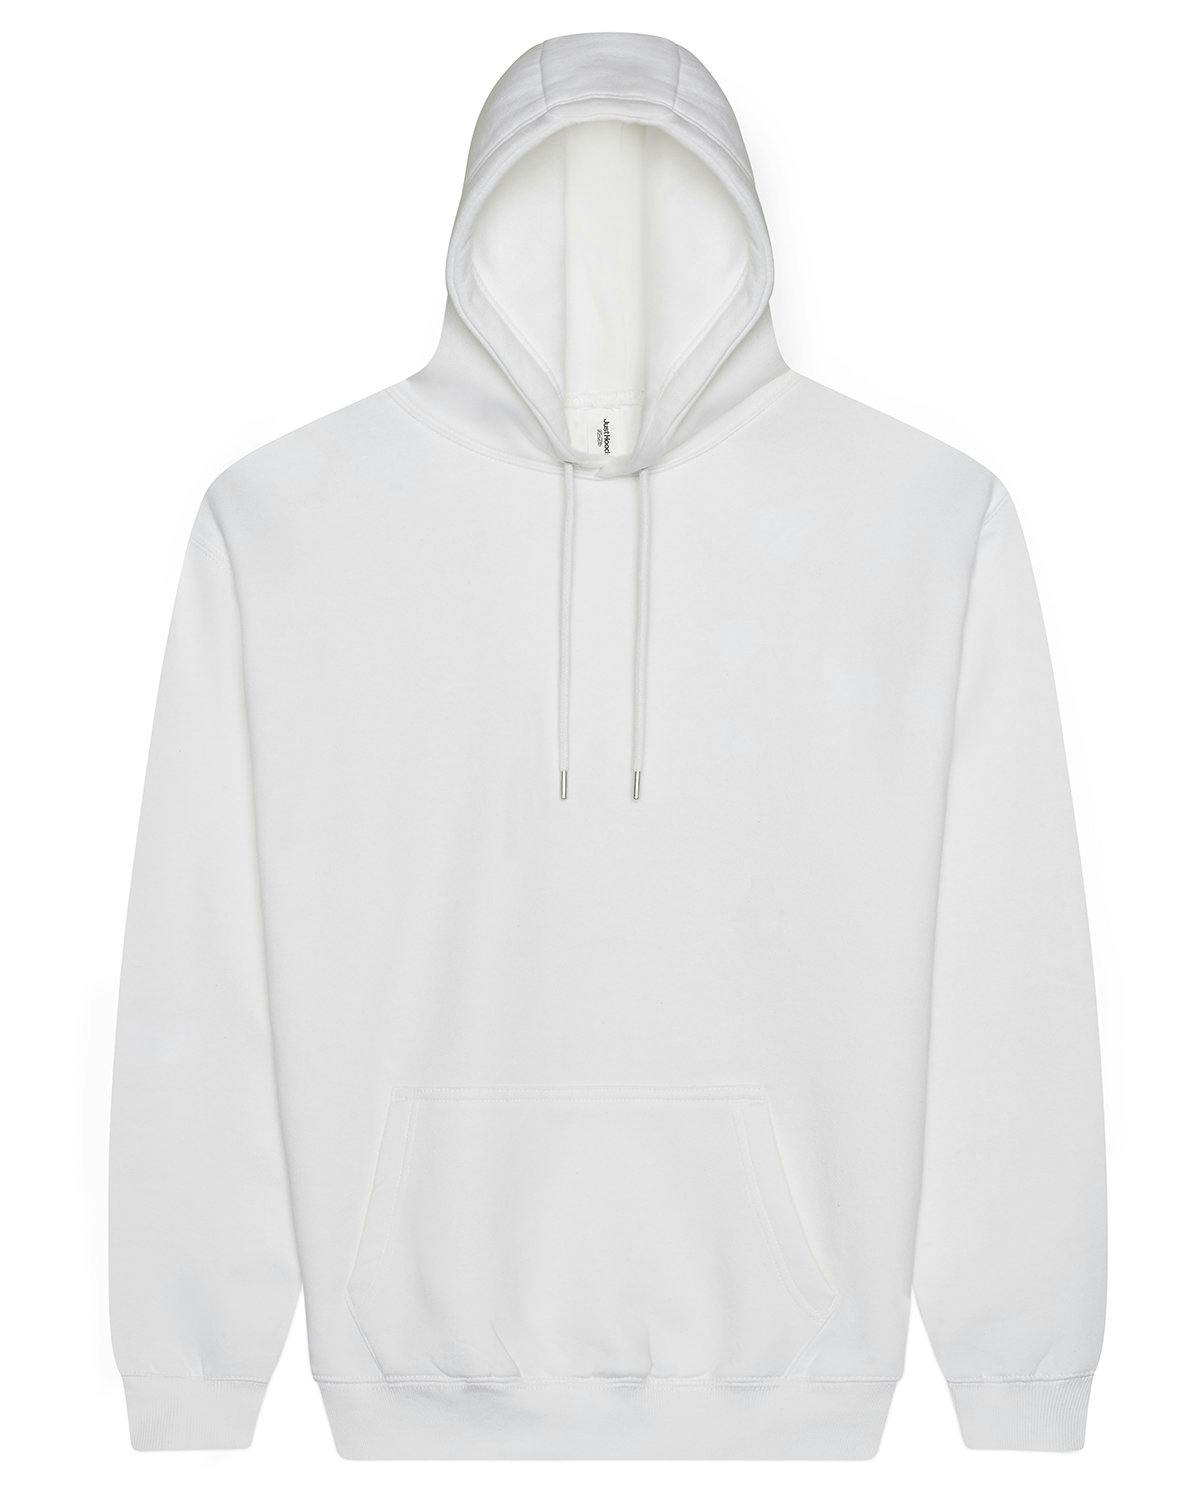 Image for Unisex Urban Heavyweight Hooded Sweatshirt